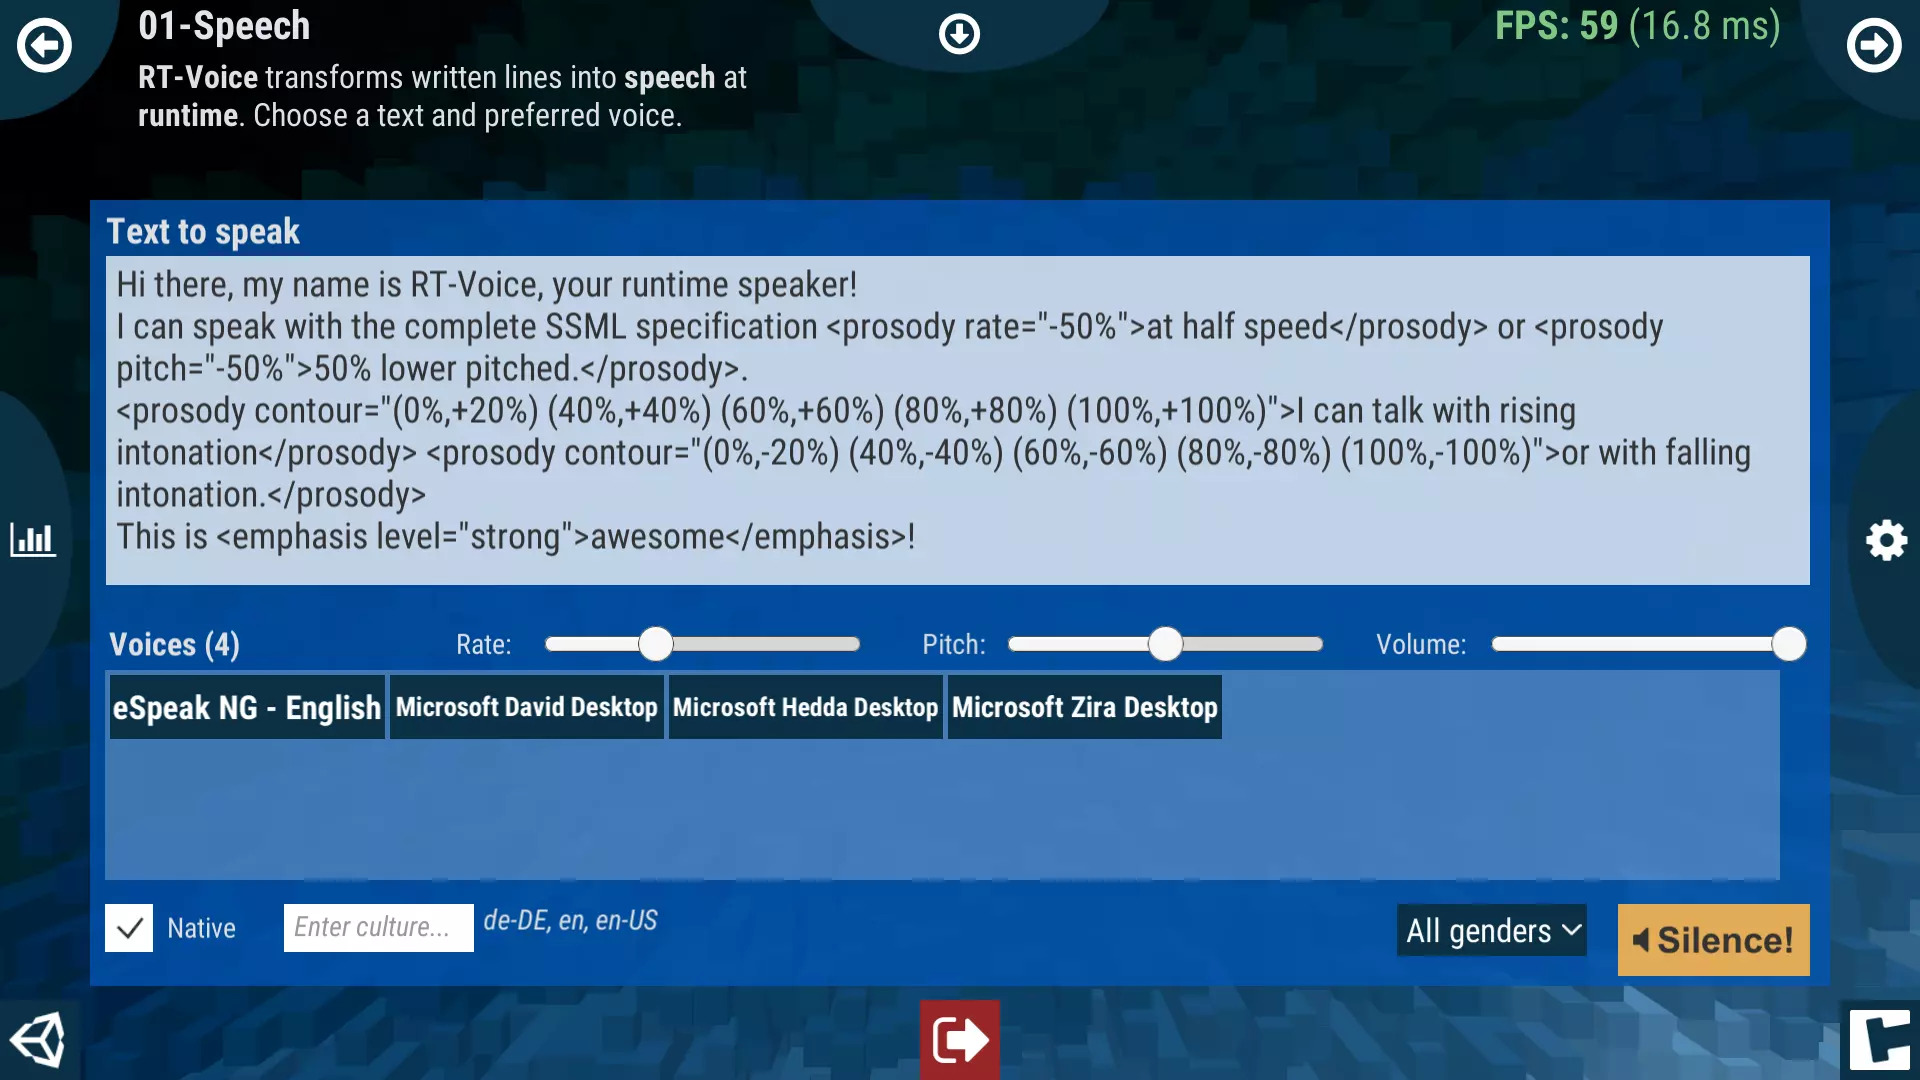 microsoft david desktop text to speech